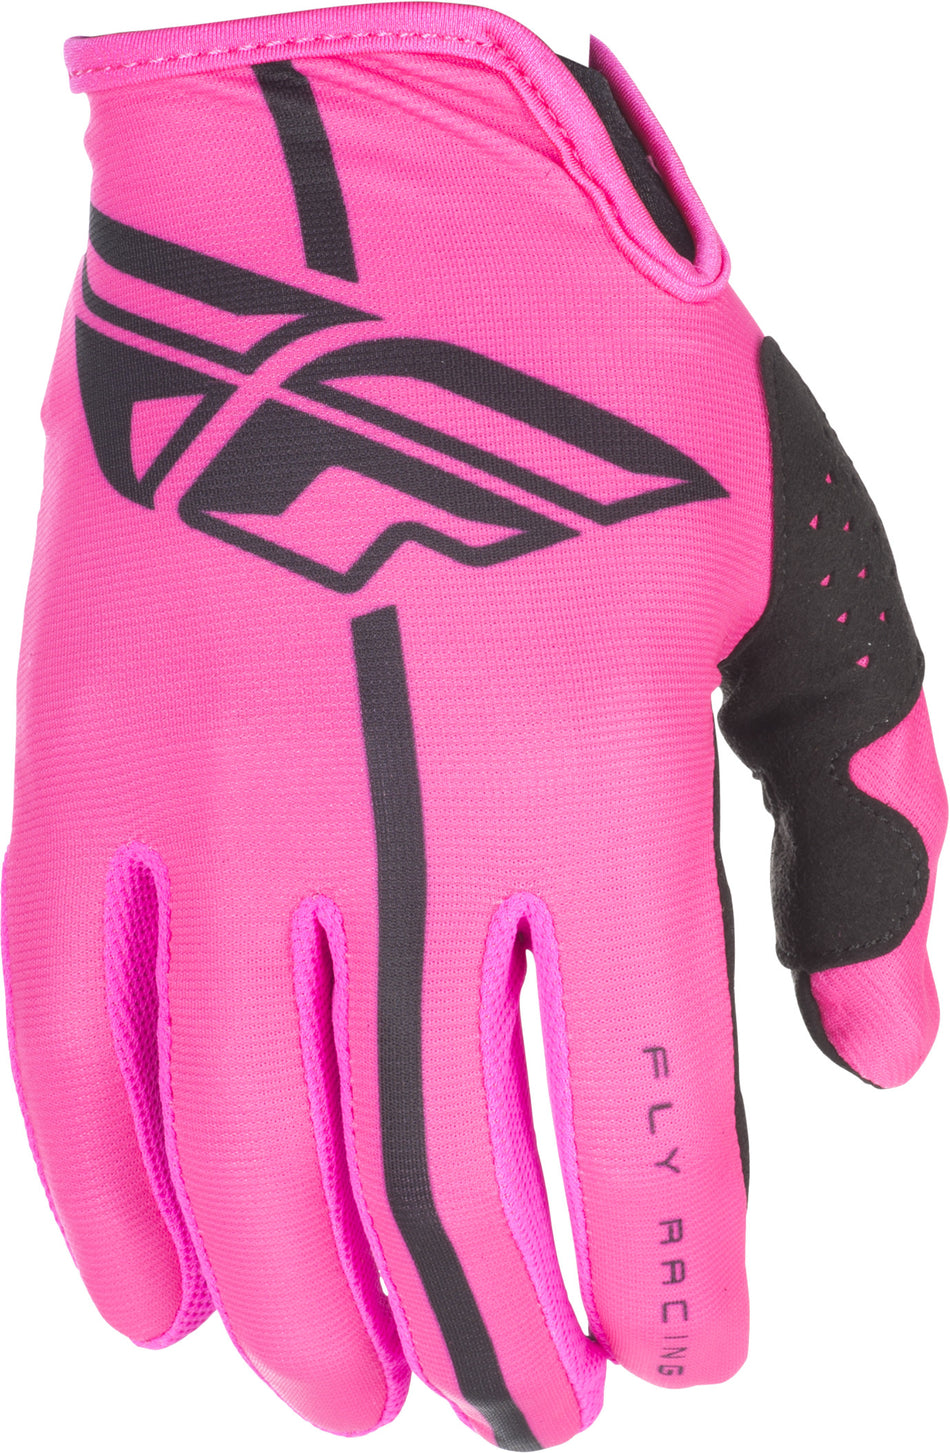 FLY RACING Lite Gloves Neon Pink/Black Sz 7 371-01707